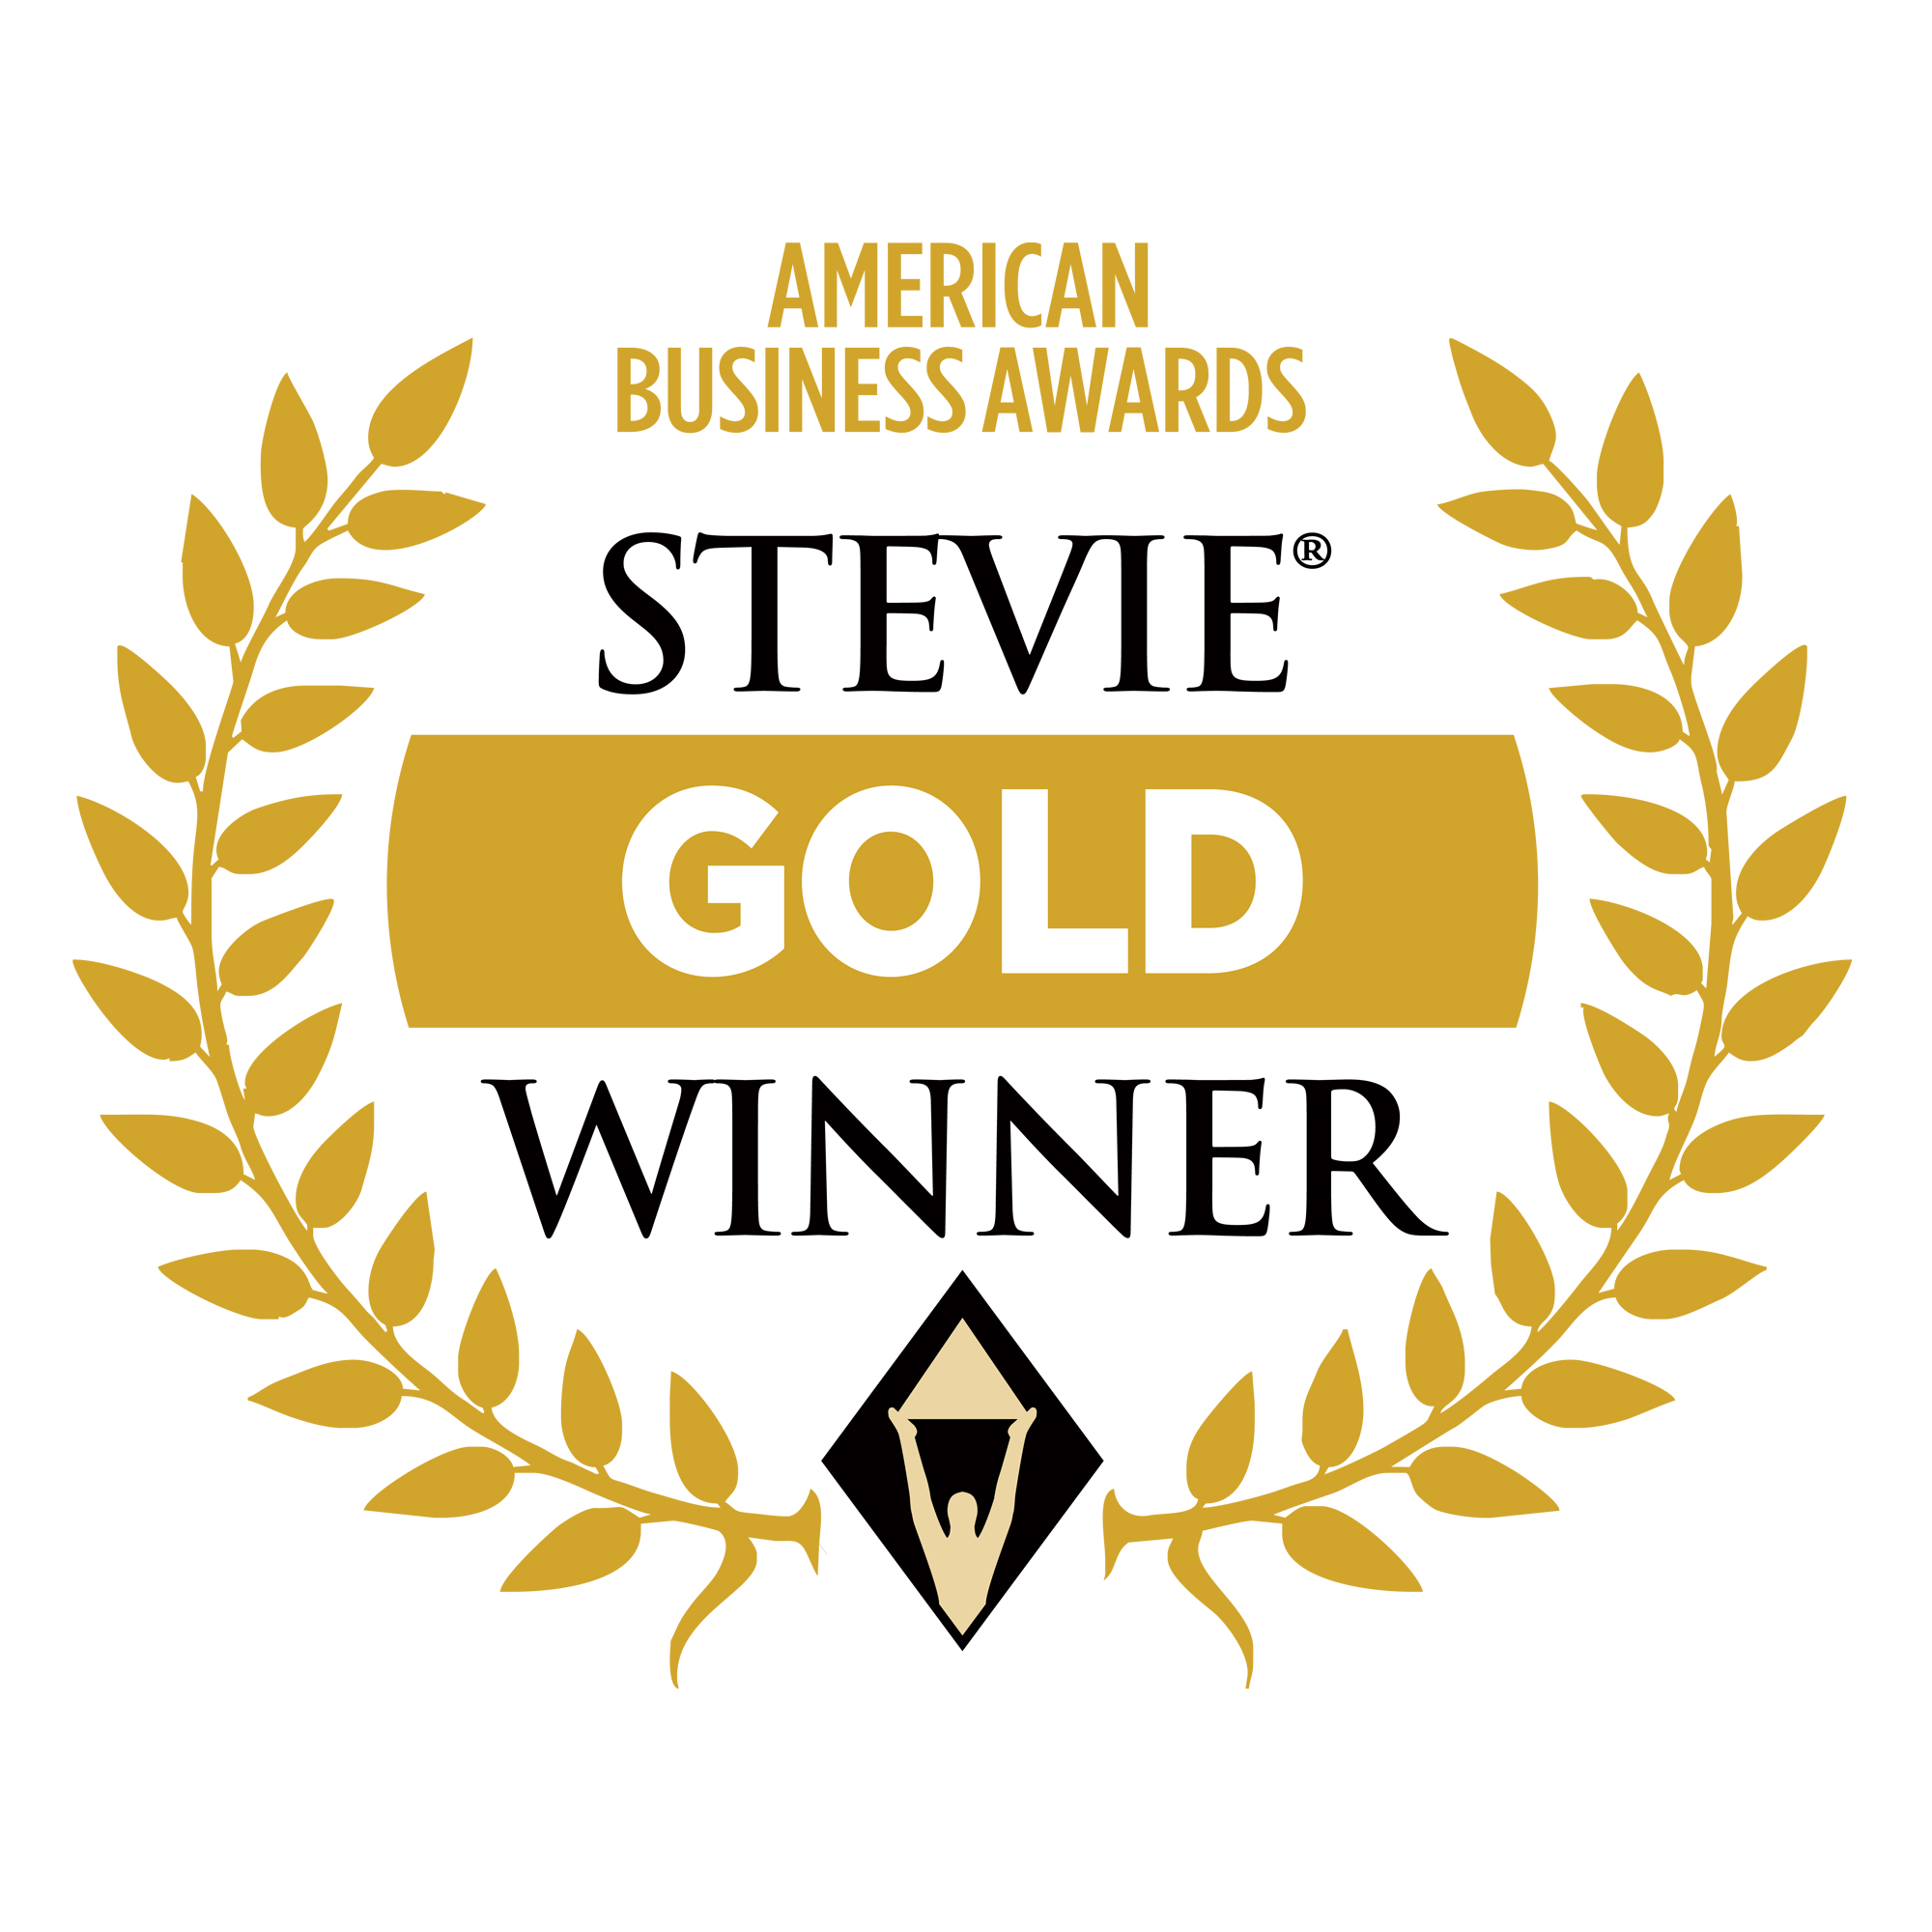 Award, Logo_(American Business Awards) Stevie Awards_Gold winner_edited removed year and aba_on transparent_02_FAV.jpg